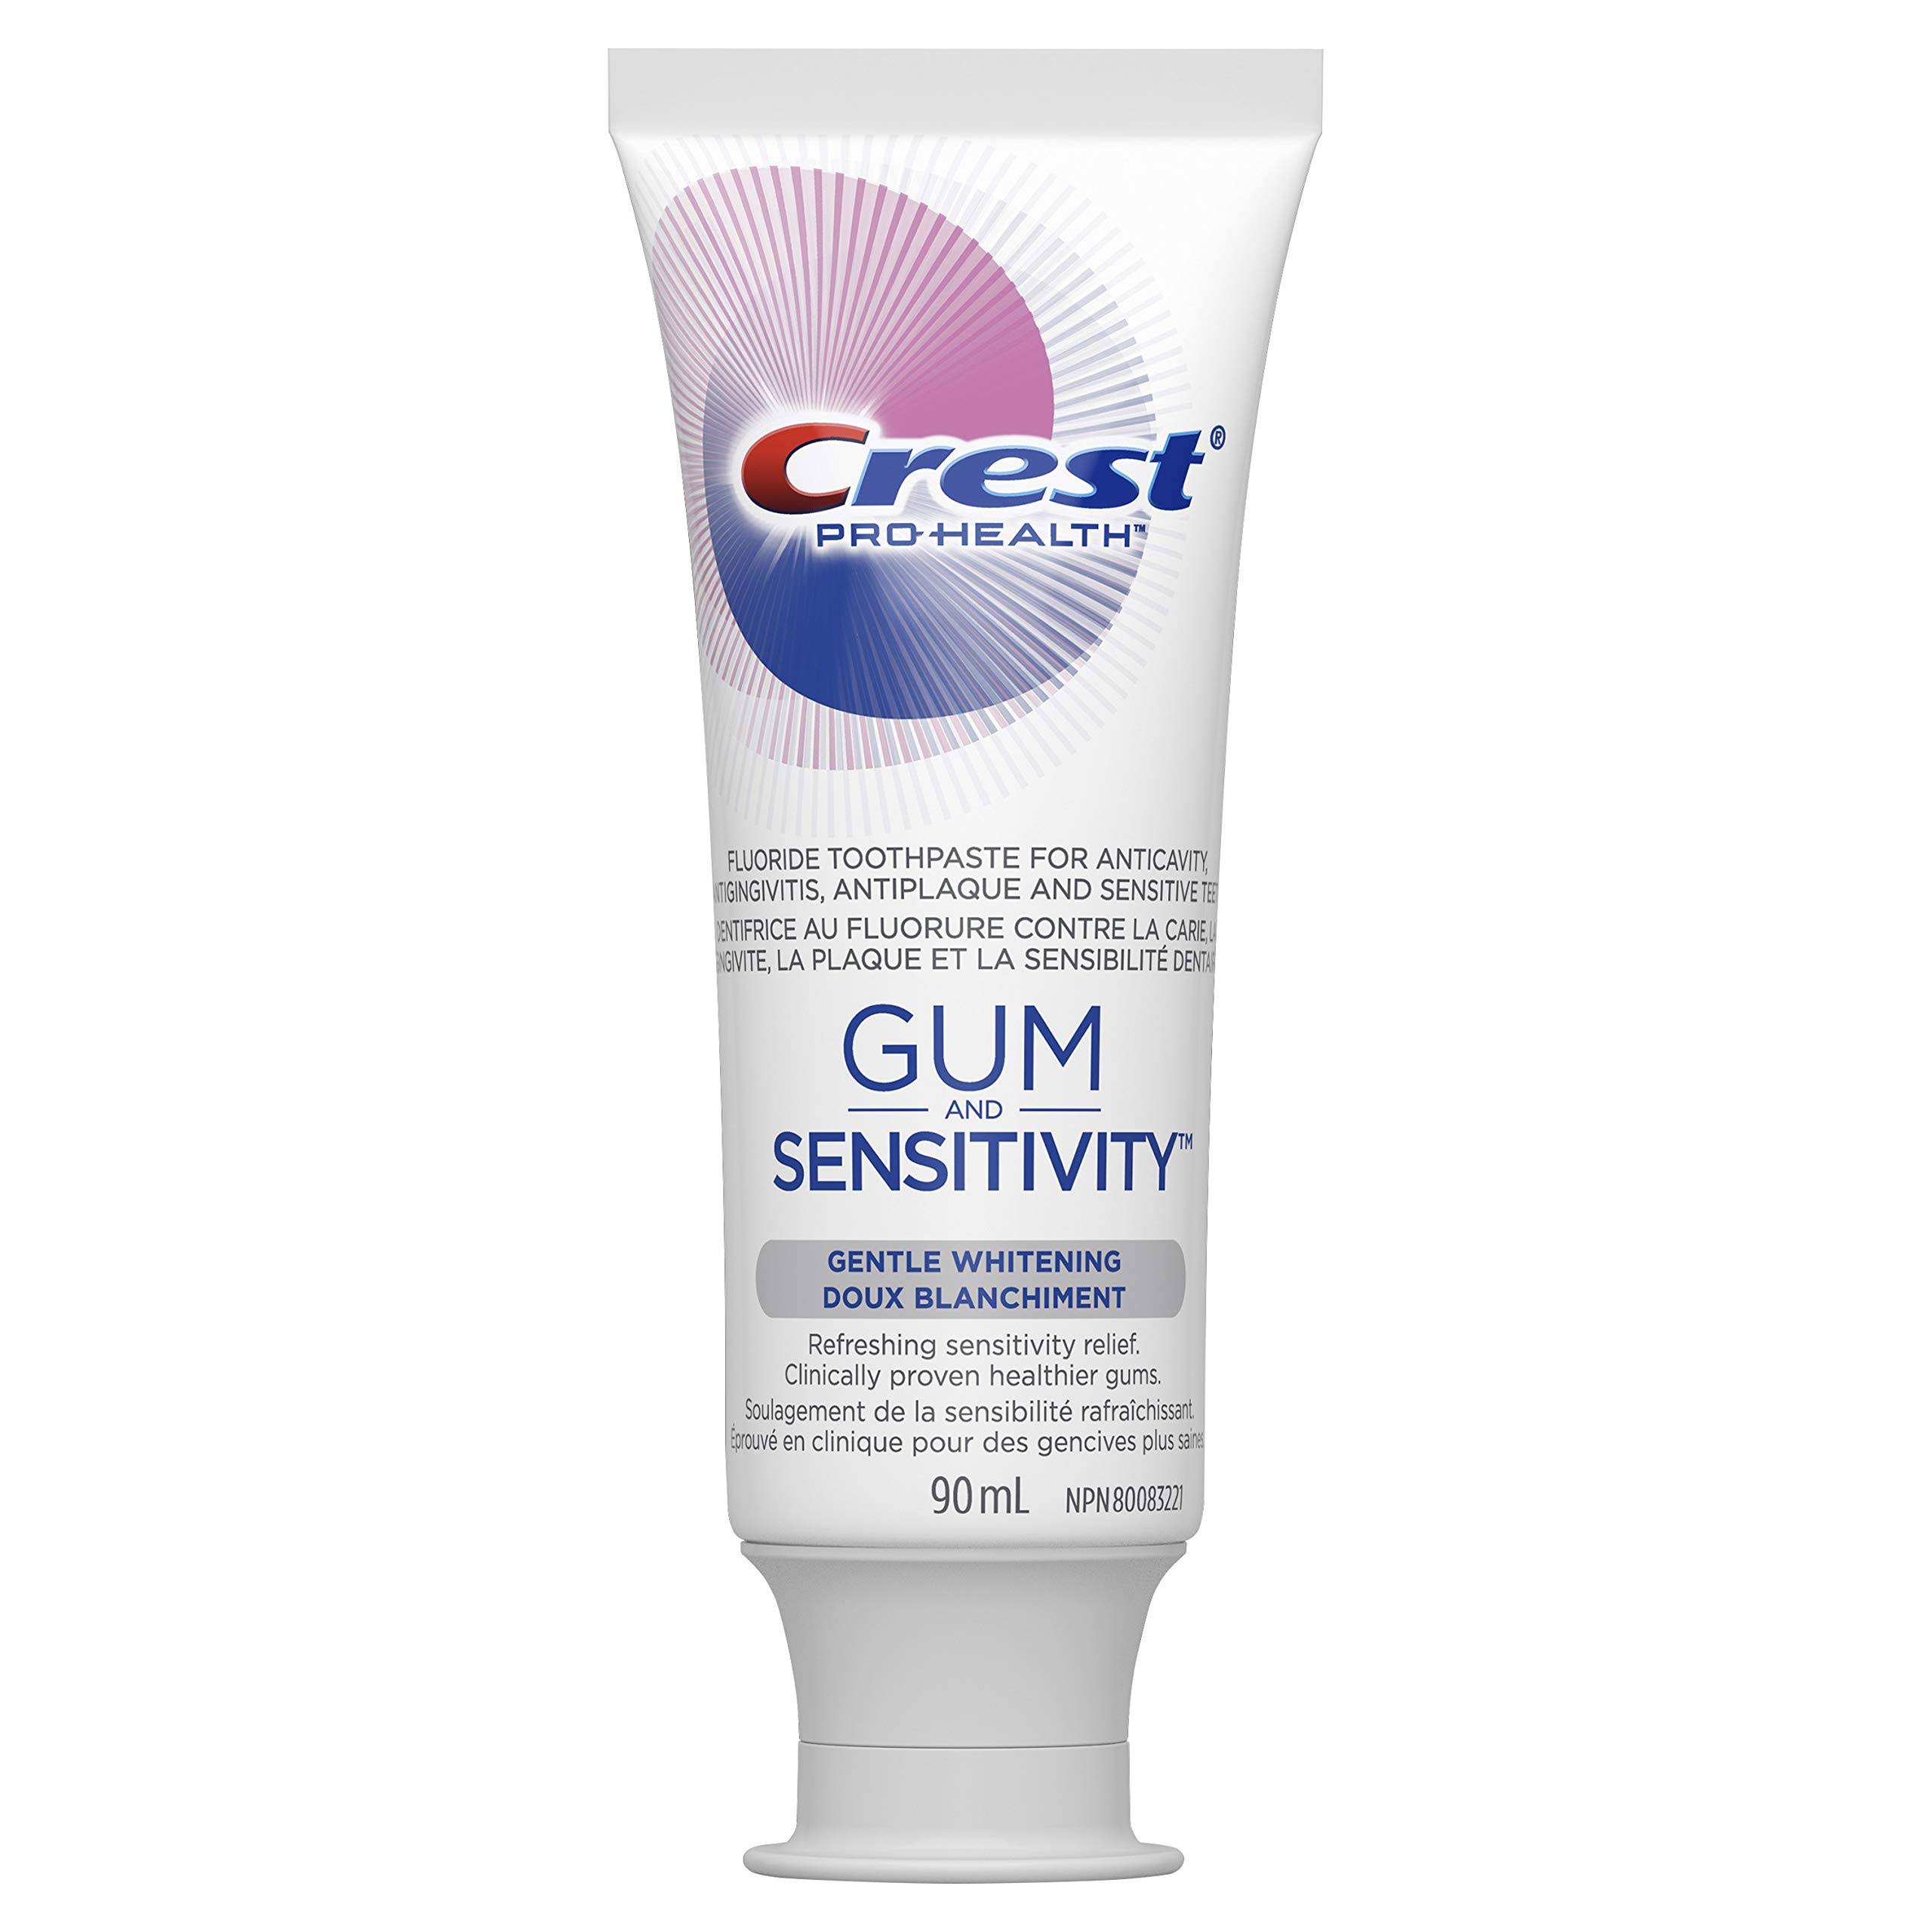 Crest Gum And Sensitivity, Sensitive Toothpaste Gentle Whitening